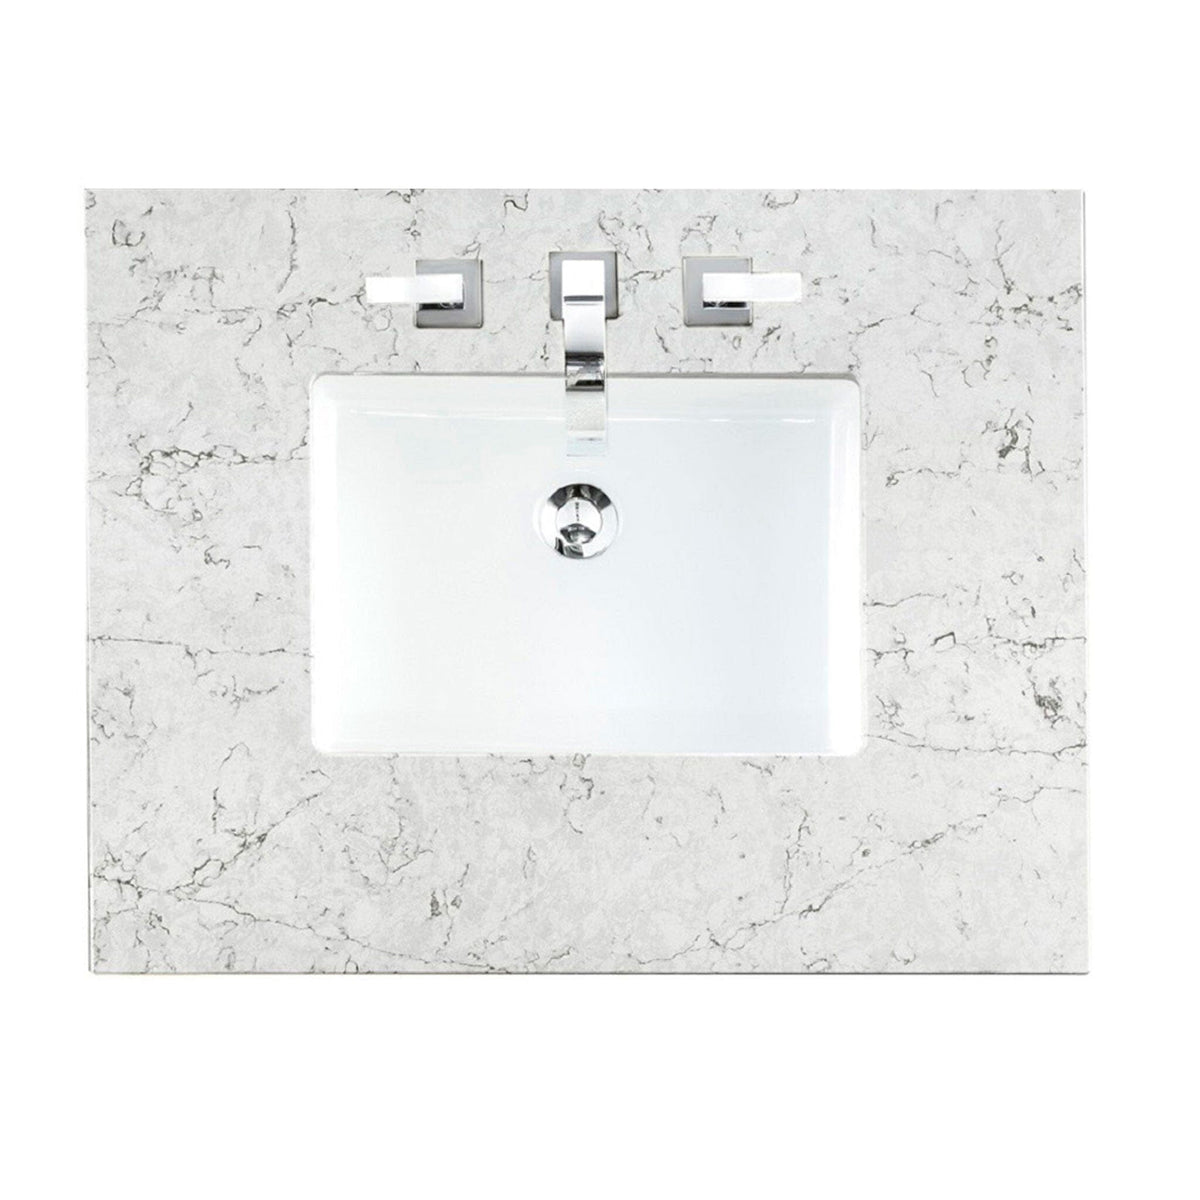 102" De Soto Bright White Double Sink Bathroom Vanity Deluxe Set with 3 cm Eternal Jasmine Pearl Quartz Top